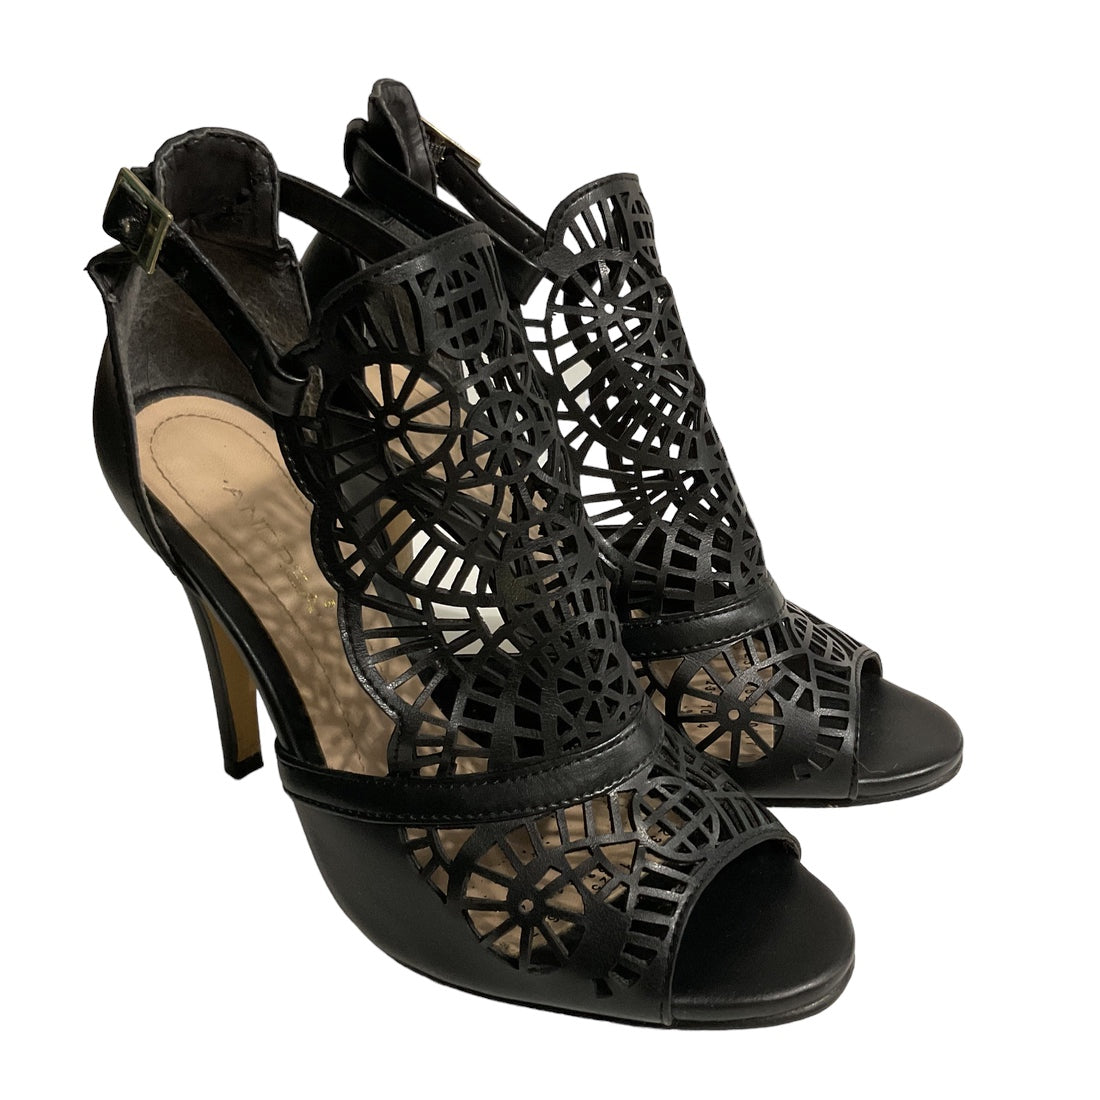 Andrea Black Leather Women’s Heels Sandals Size 6 1/2.